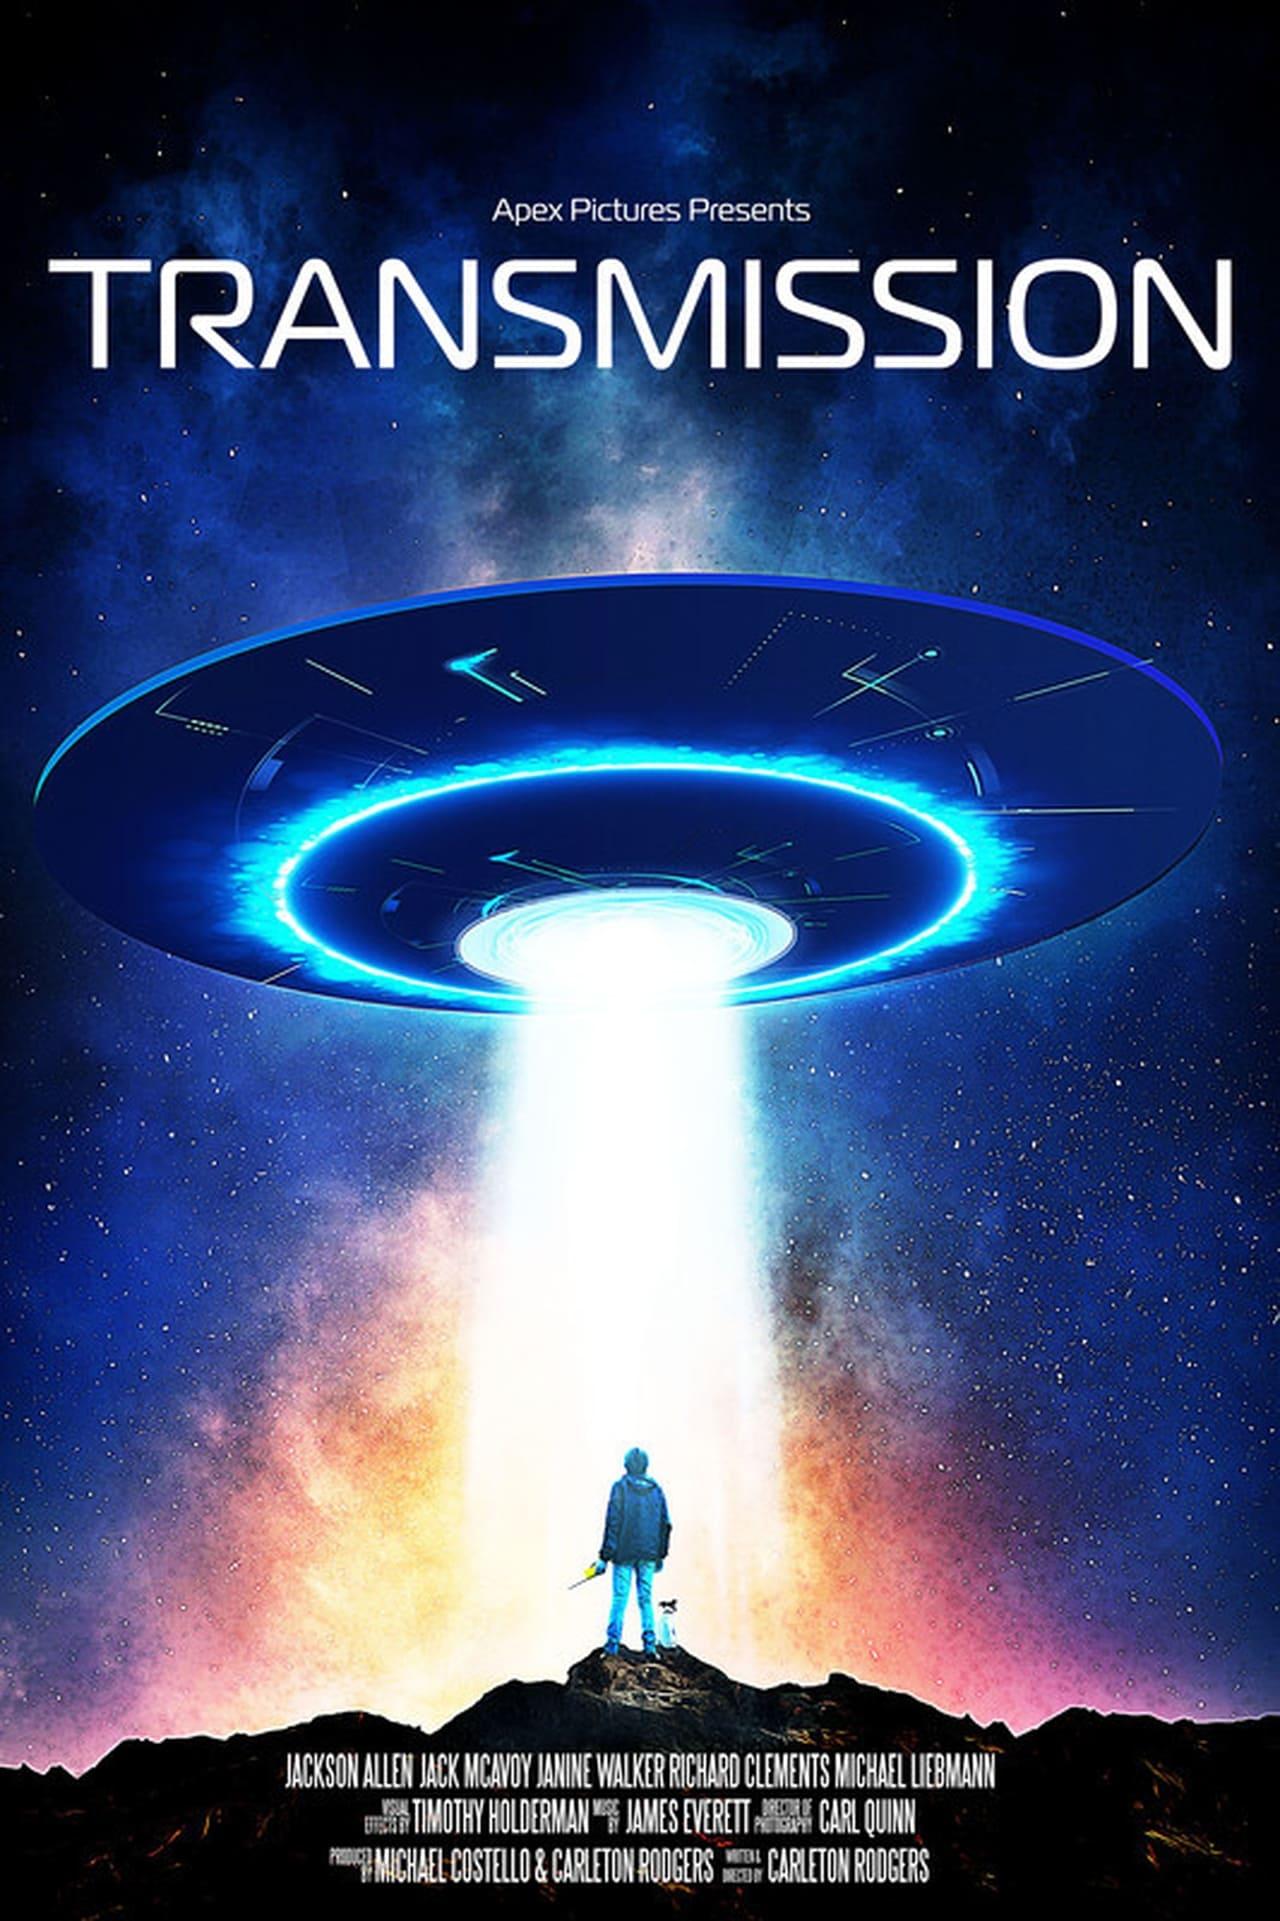 Transmission poster